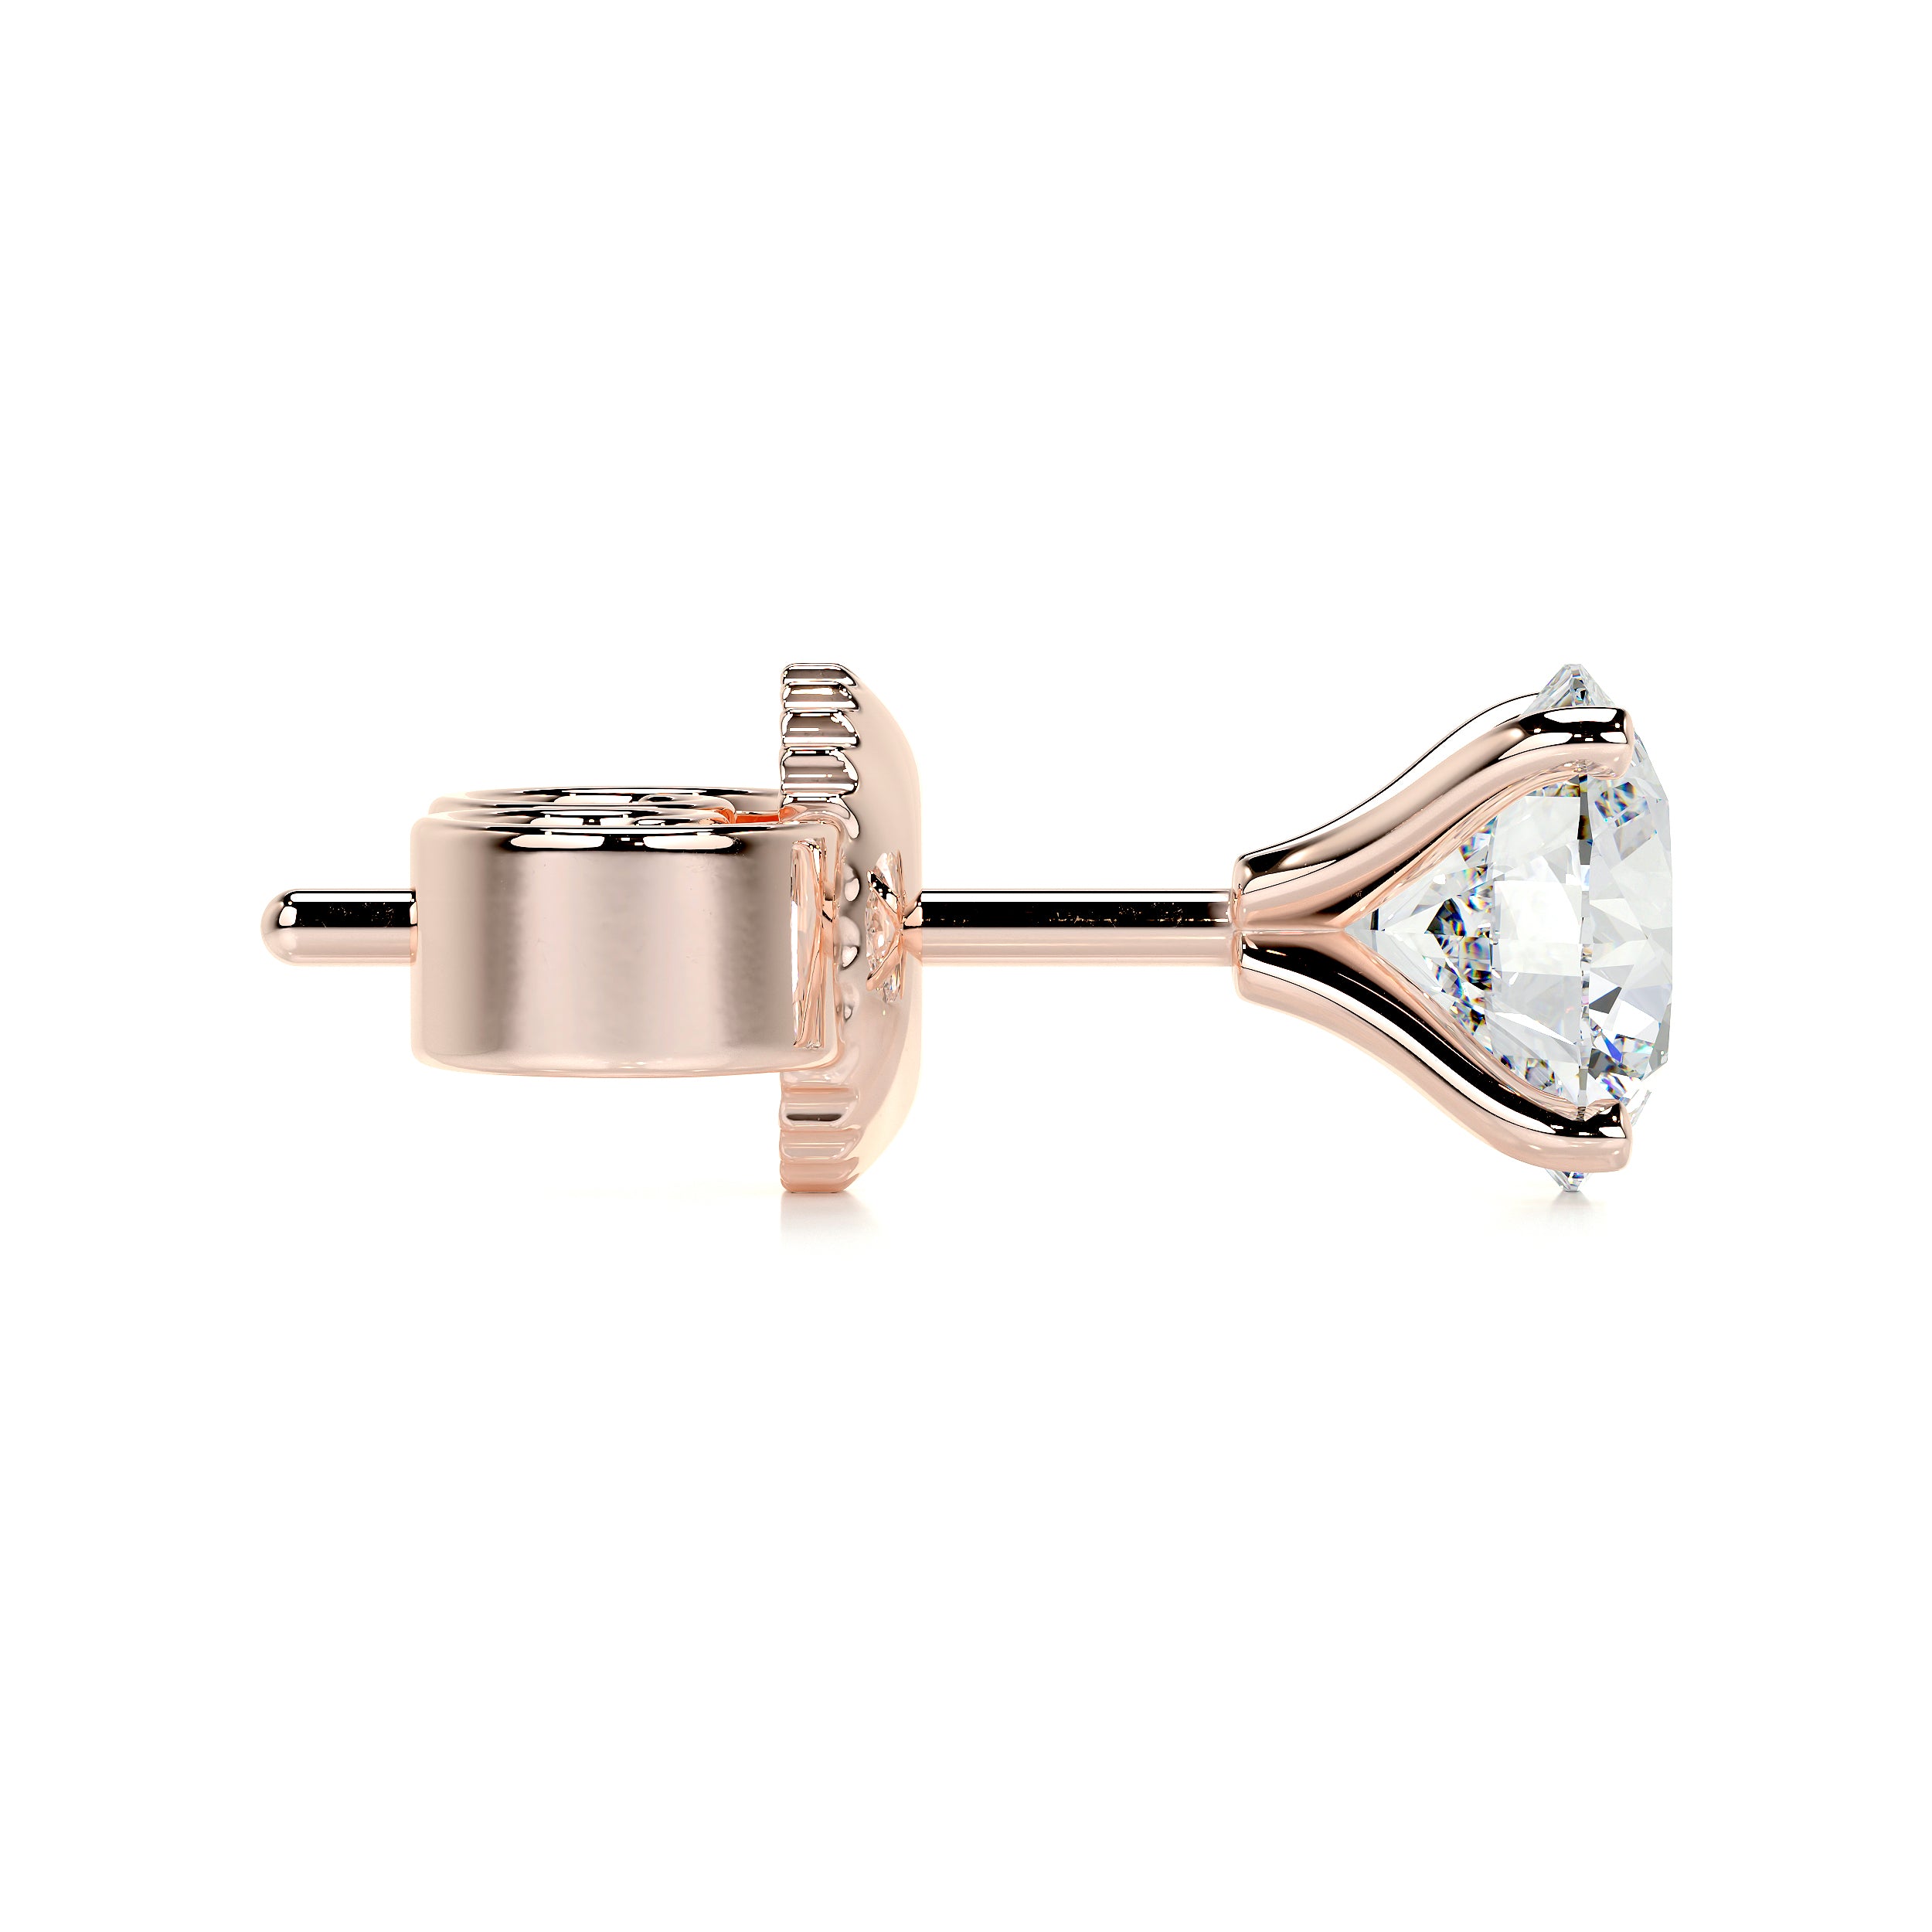 Allen Diamond Earrings   (4 Carat) -14K Rose Gold